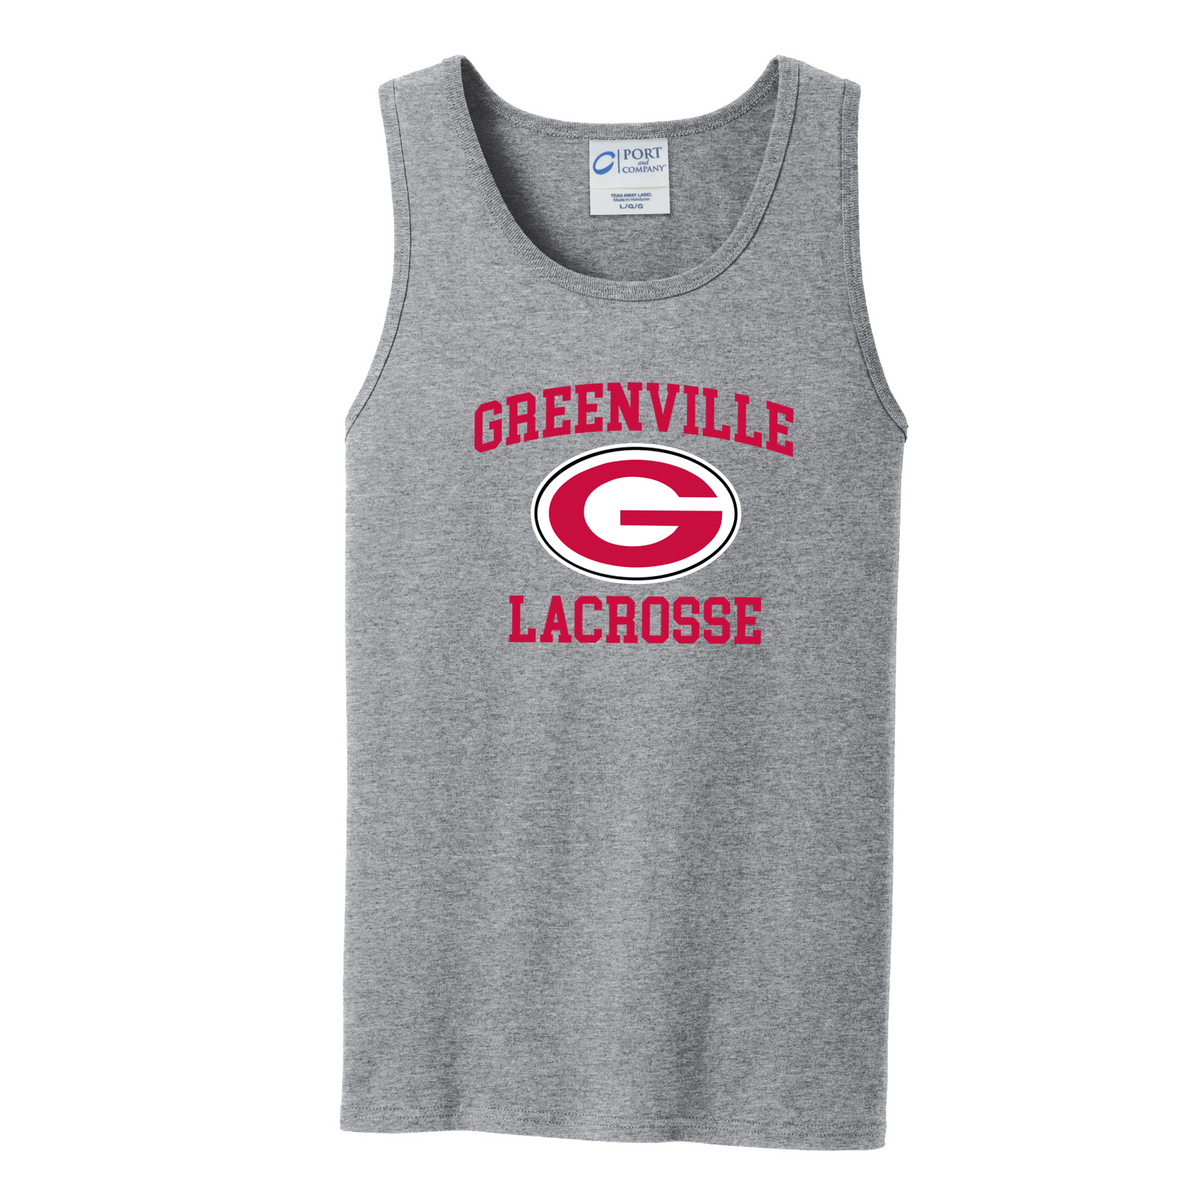 Greenville Lacrosse Sleeveless Cotton Tank Top